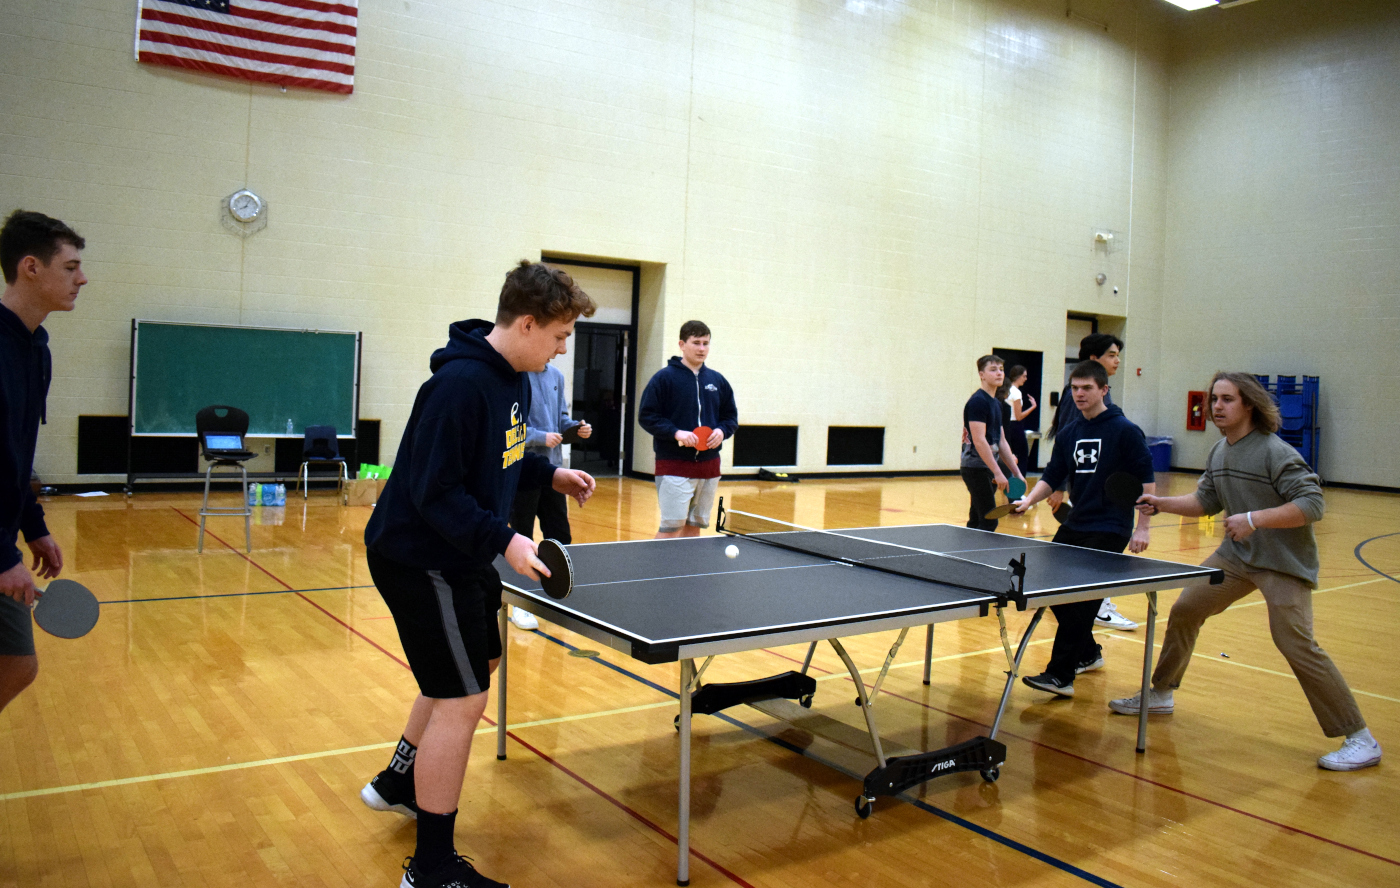 Boys play ping pong